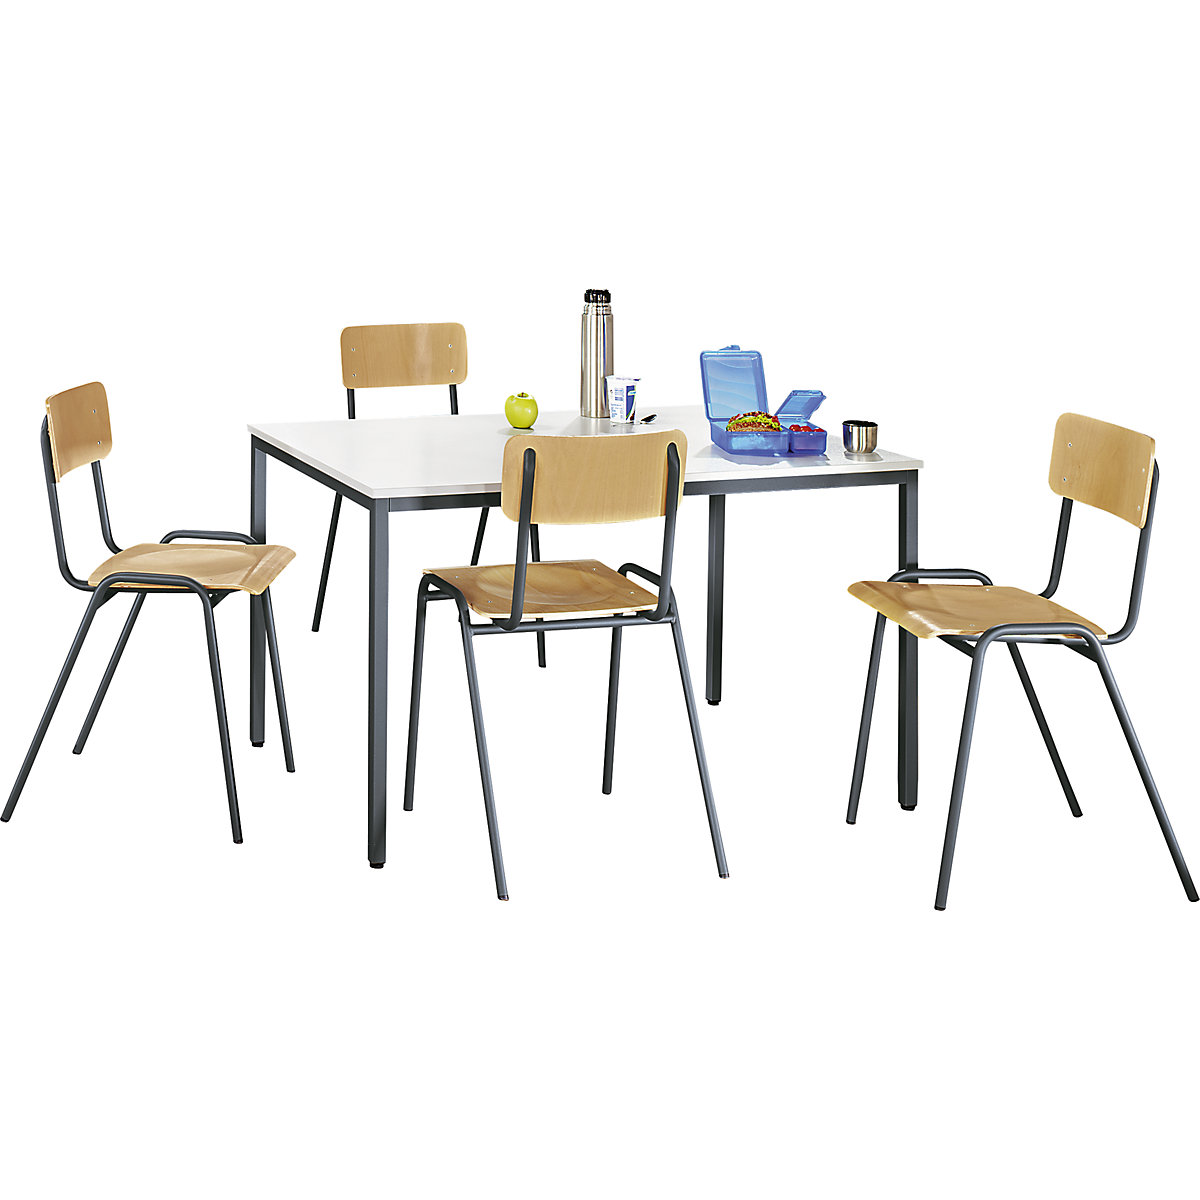 EUROKRAFTbasic – Multi-purpose seating unit, 1 table, 4 chairs, tabletop in light grey, basalt grey frame